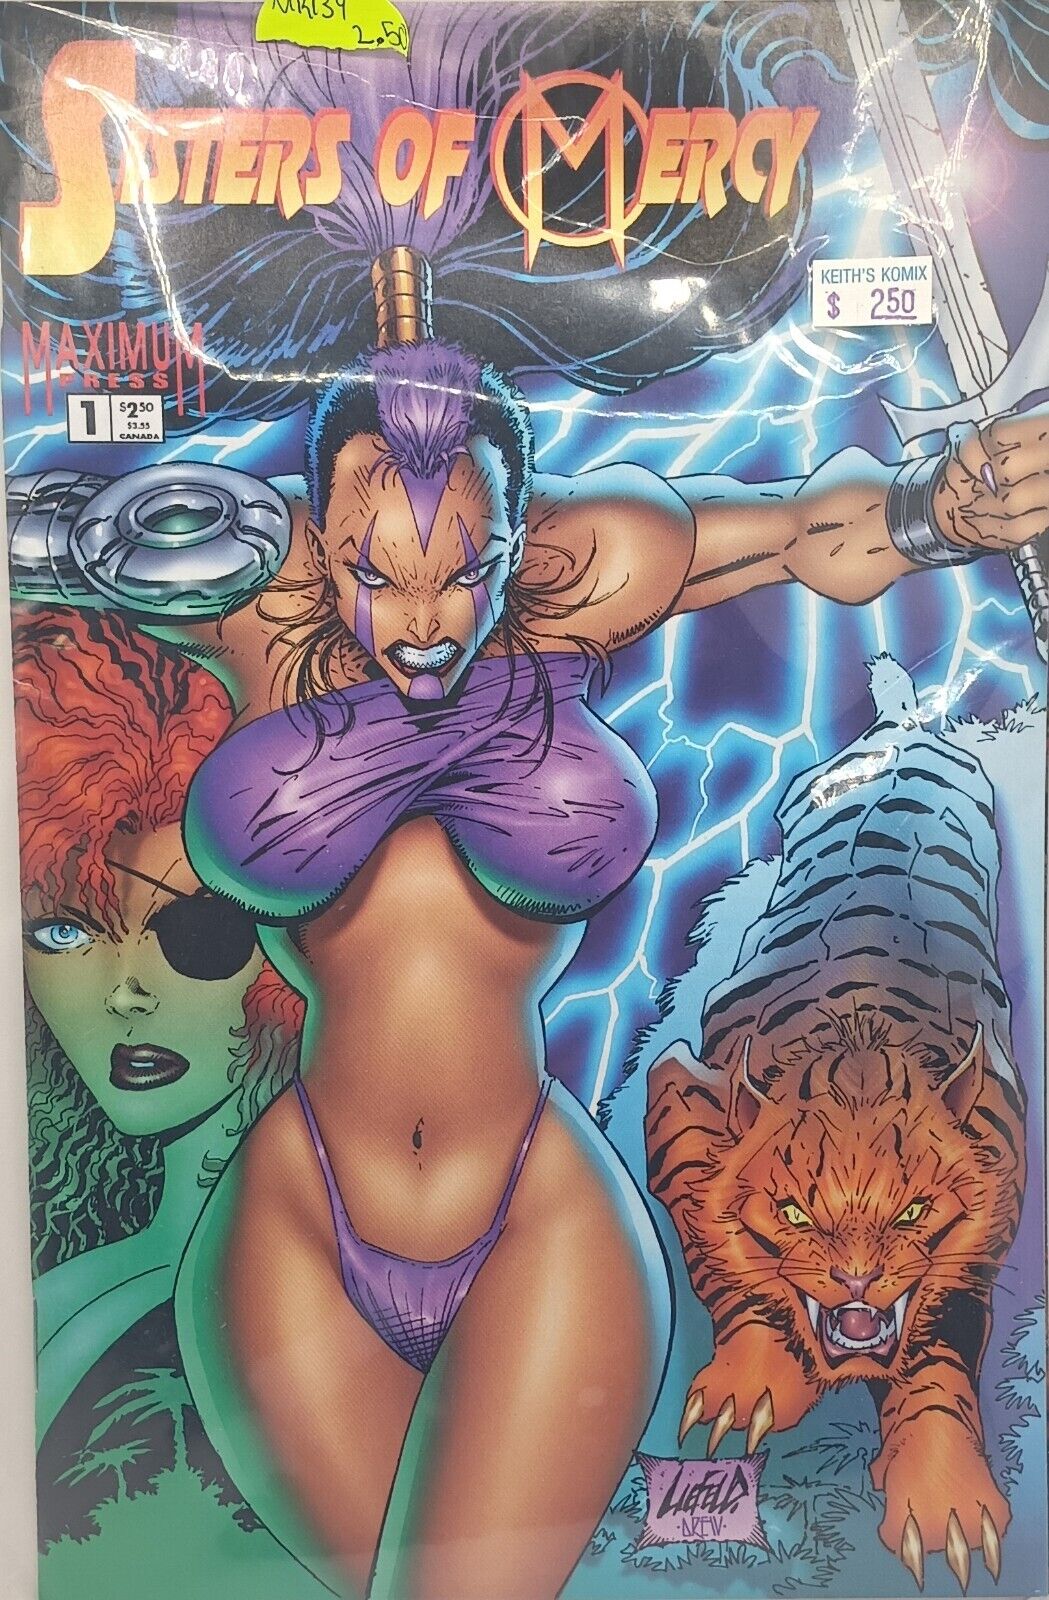 Sister of Mercy, Vol 1 #1-#2,Maximum Press,1995 (MK-358)